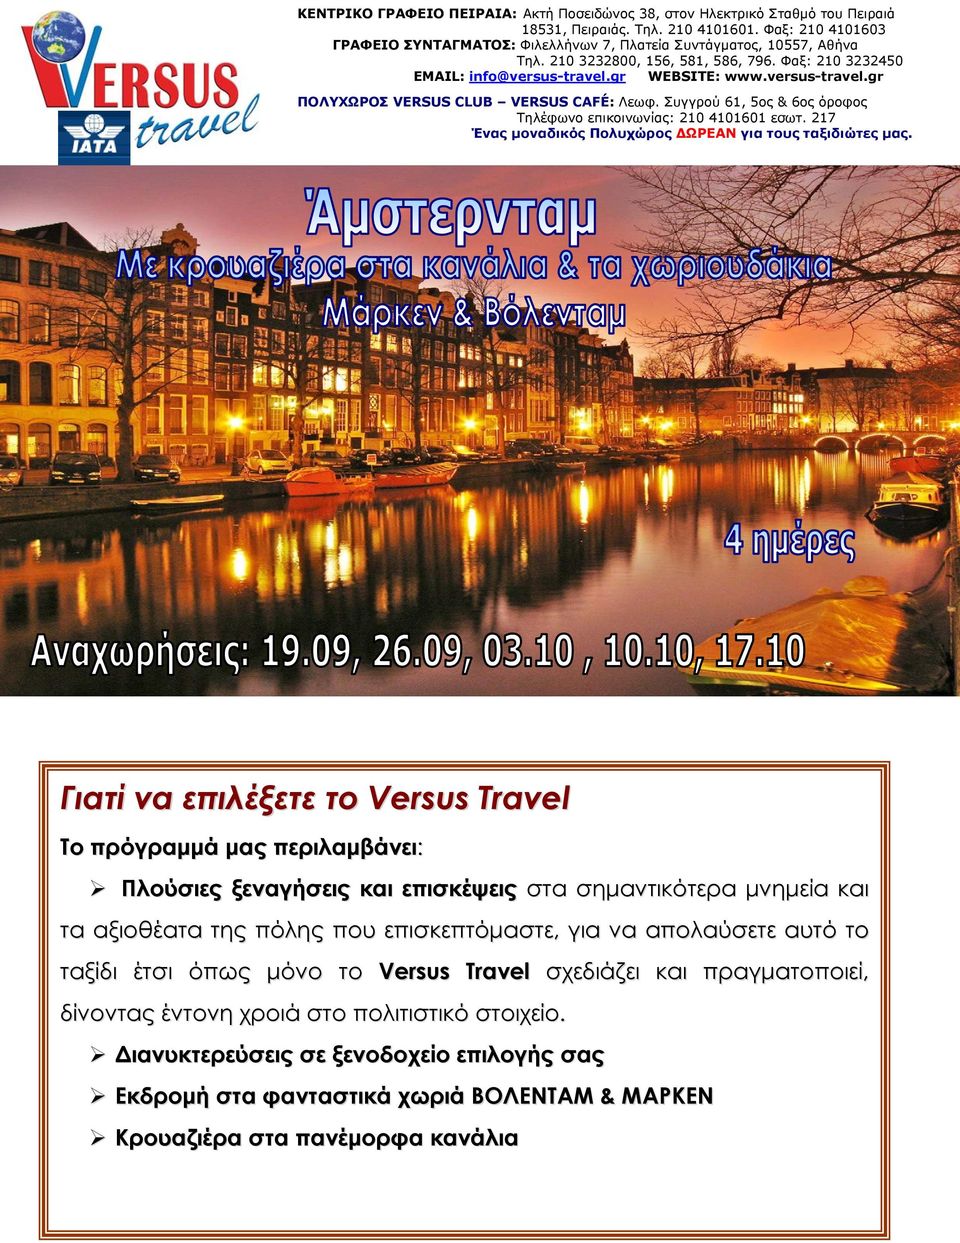 gr WEBSITE: www.versus-travel.gr ΠΟΛΥΧΩΡΟΣ VERSUS CLUB VERSUS CAFÉ: Λεωφ. Συγγρού 61, 5ος & 6ος όροφος Τηλέφωνο επικοινωνίας: 210 4101601 εσωτ.